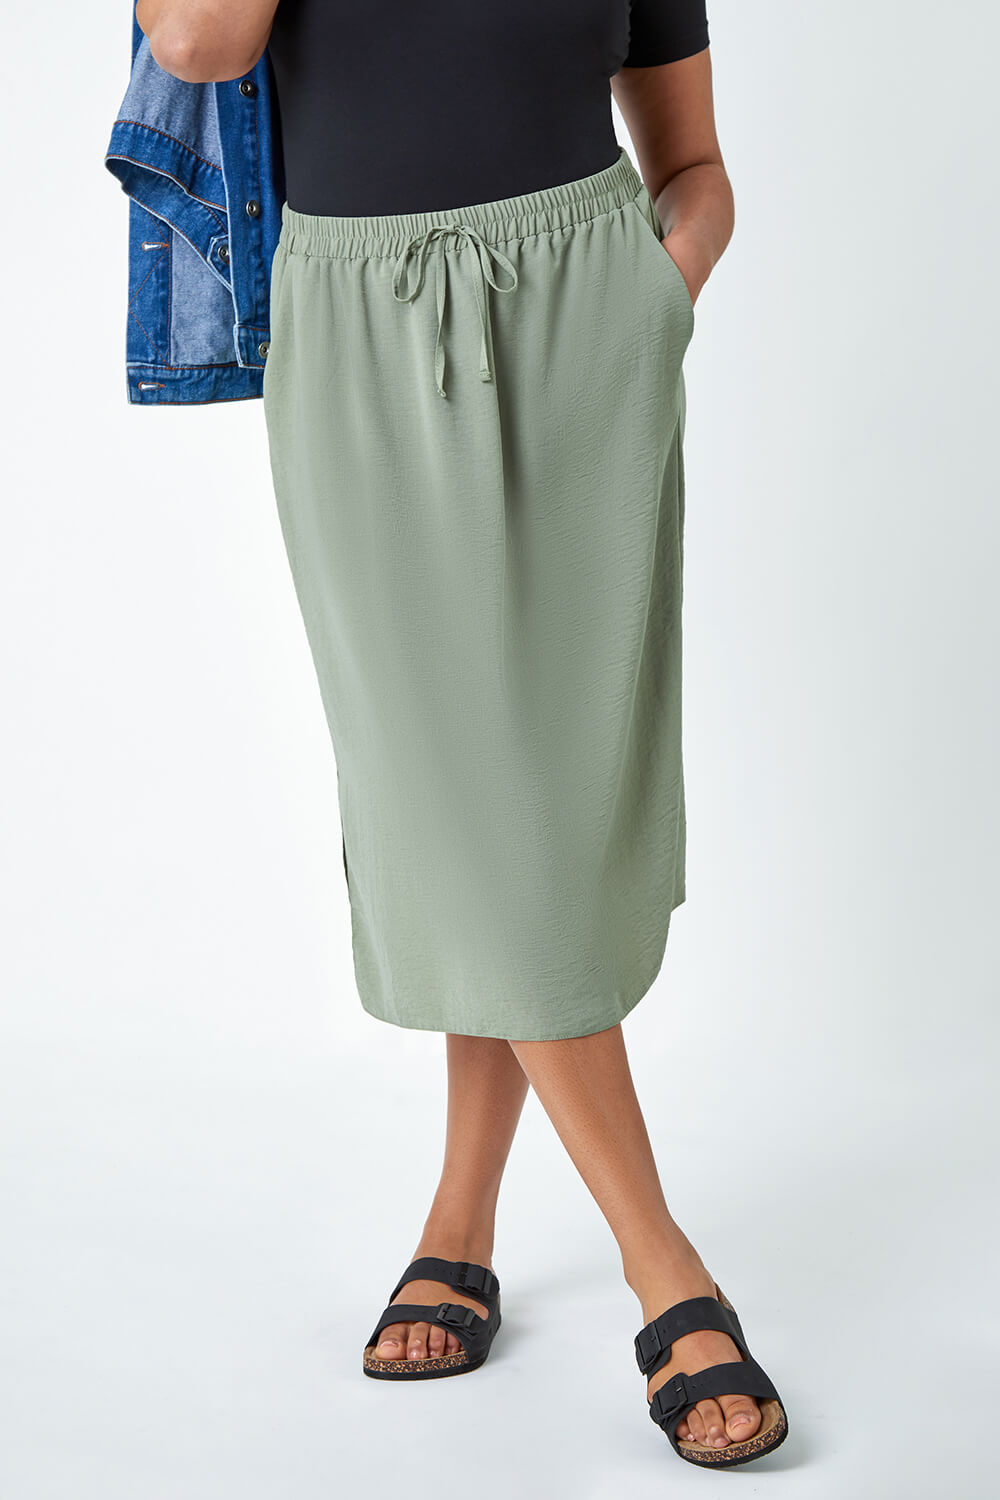 KHAKI Curve Linen Look Midi Skirt, Image 4 of 5